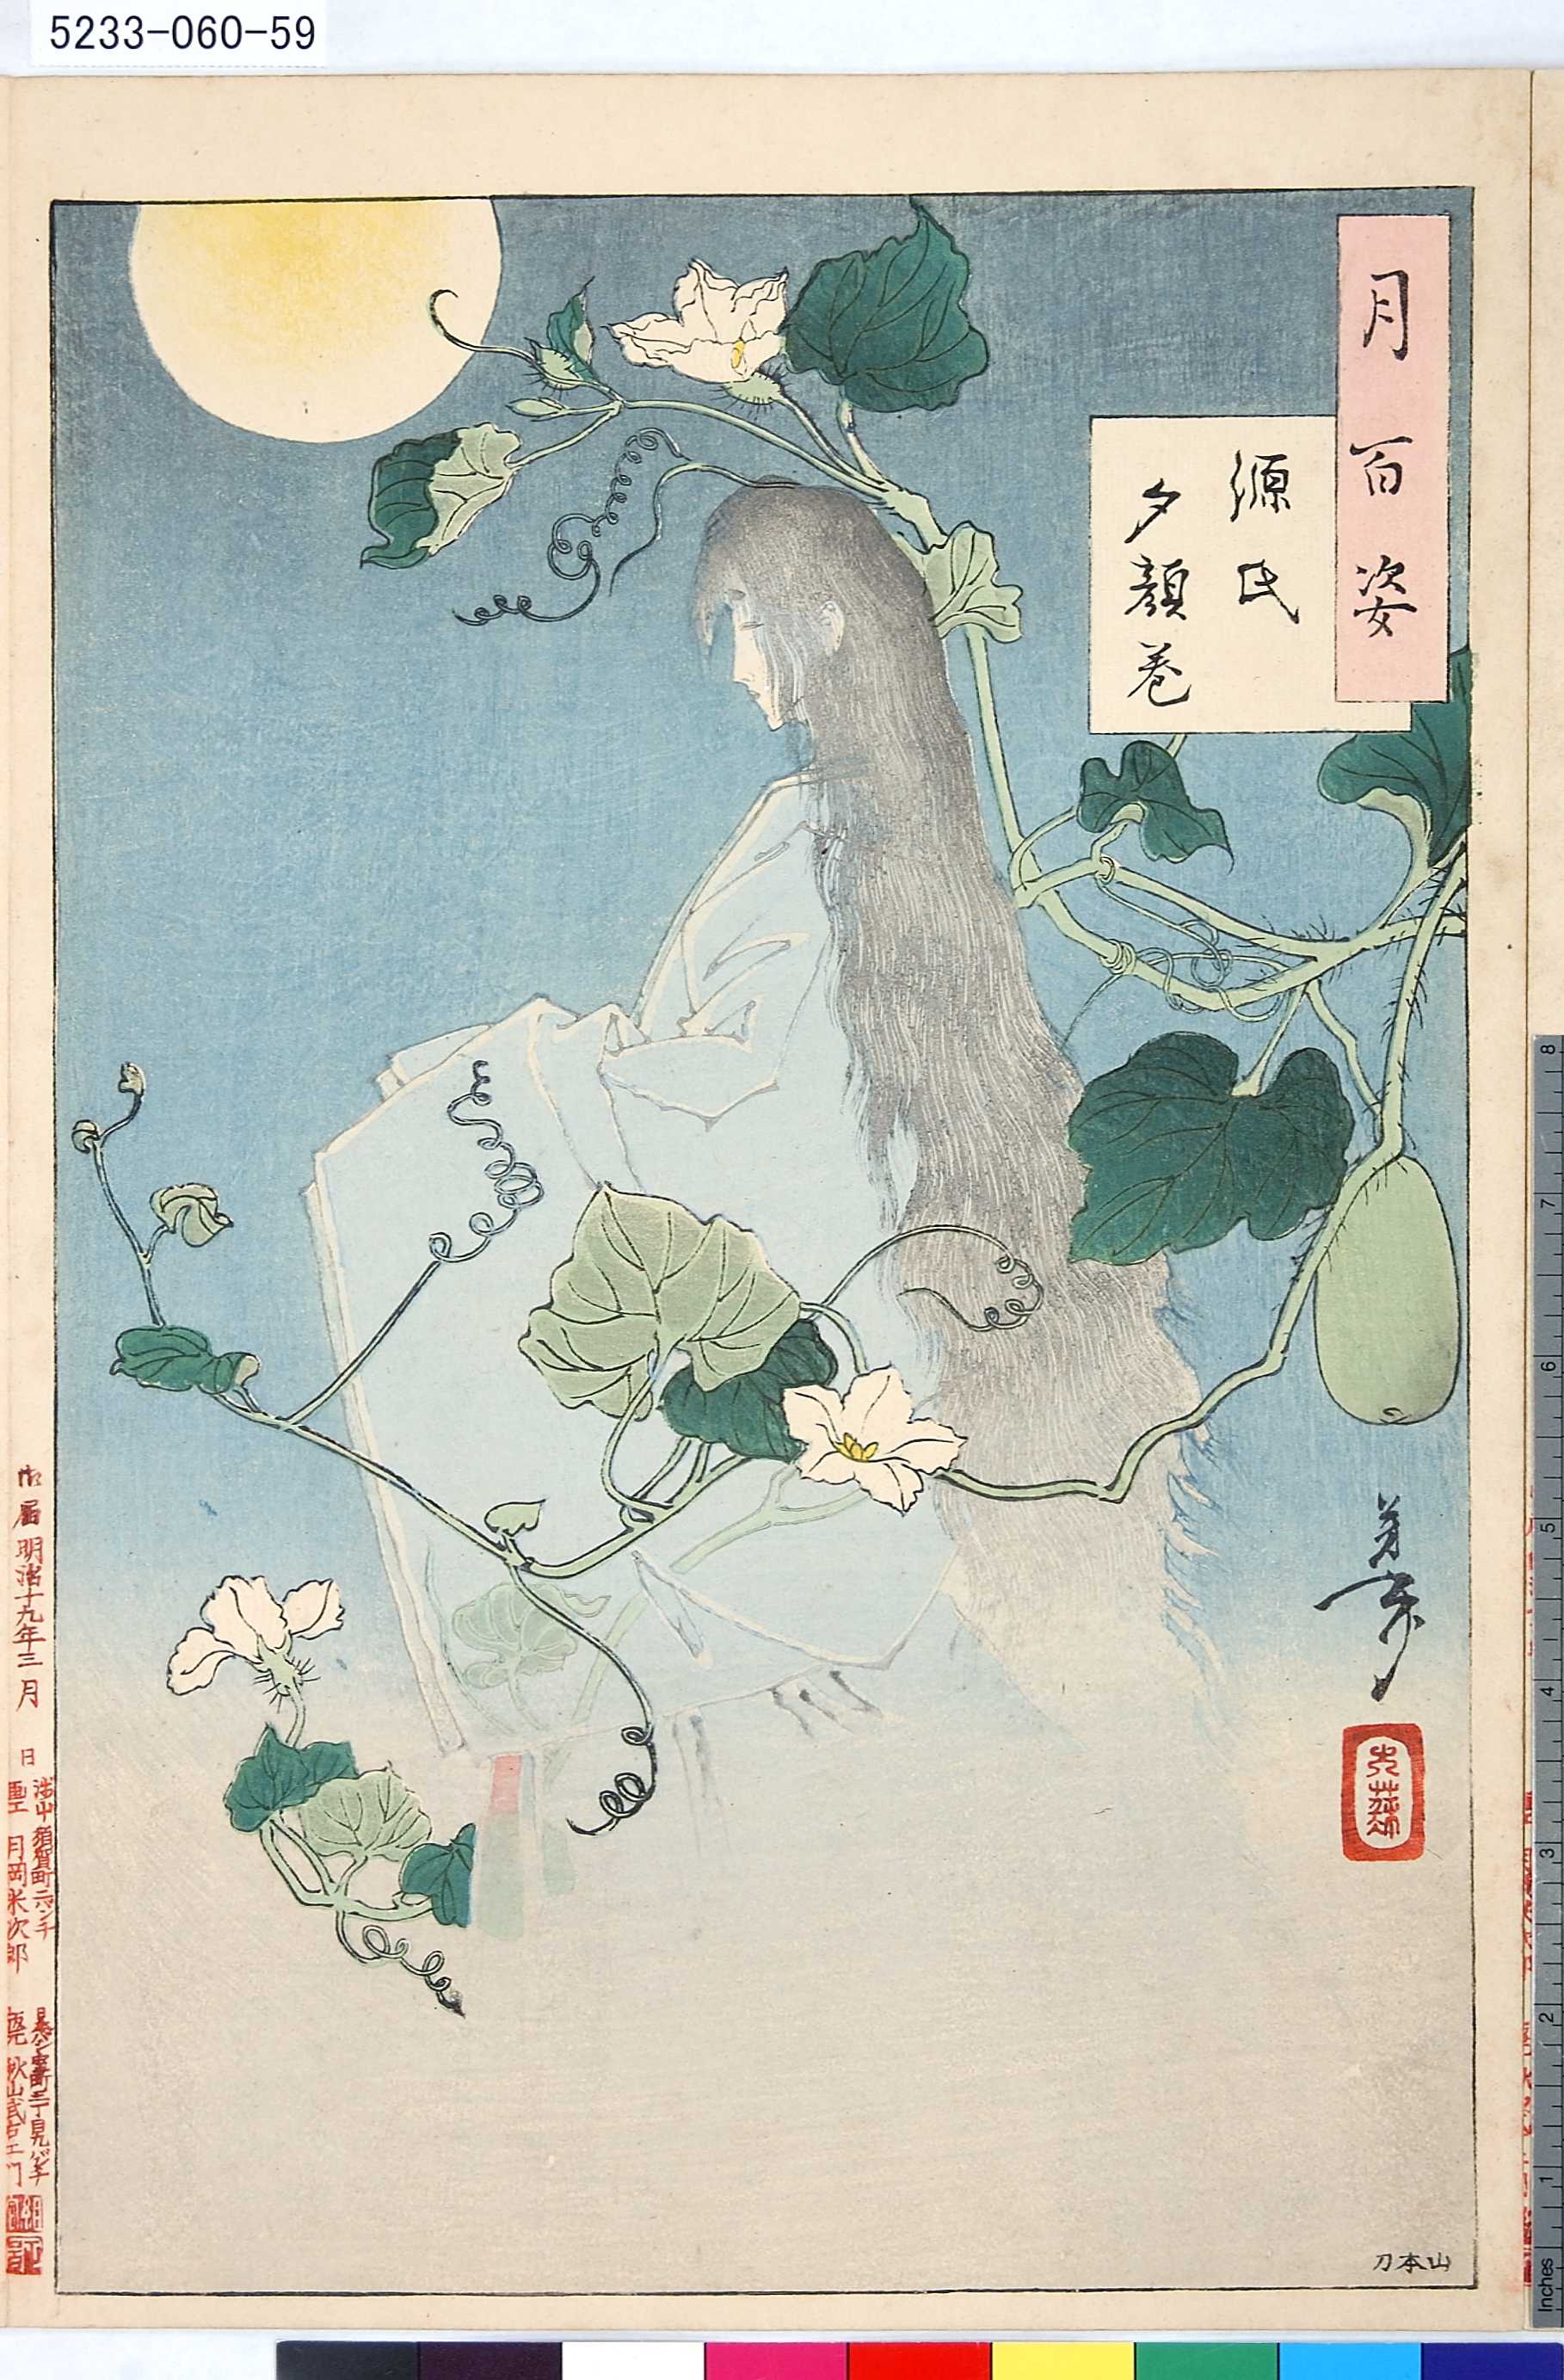 The Art of Yuki-Oto — Hisuian Voltorb is precious